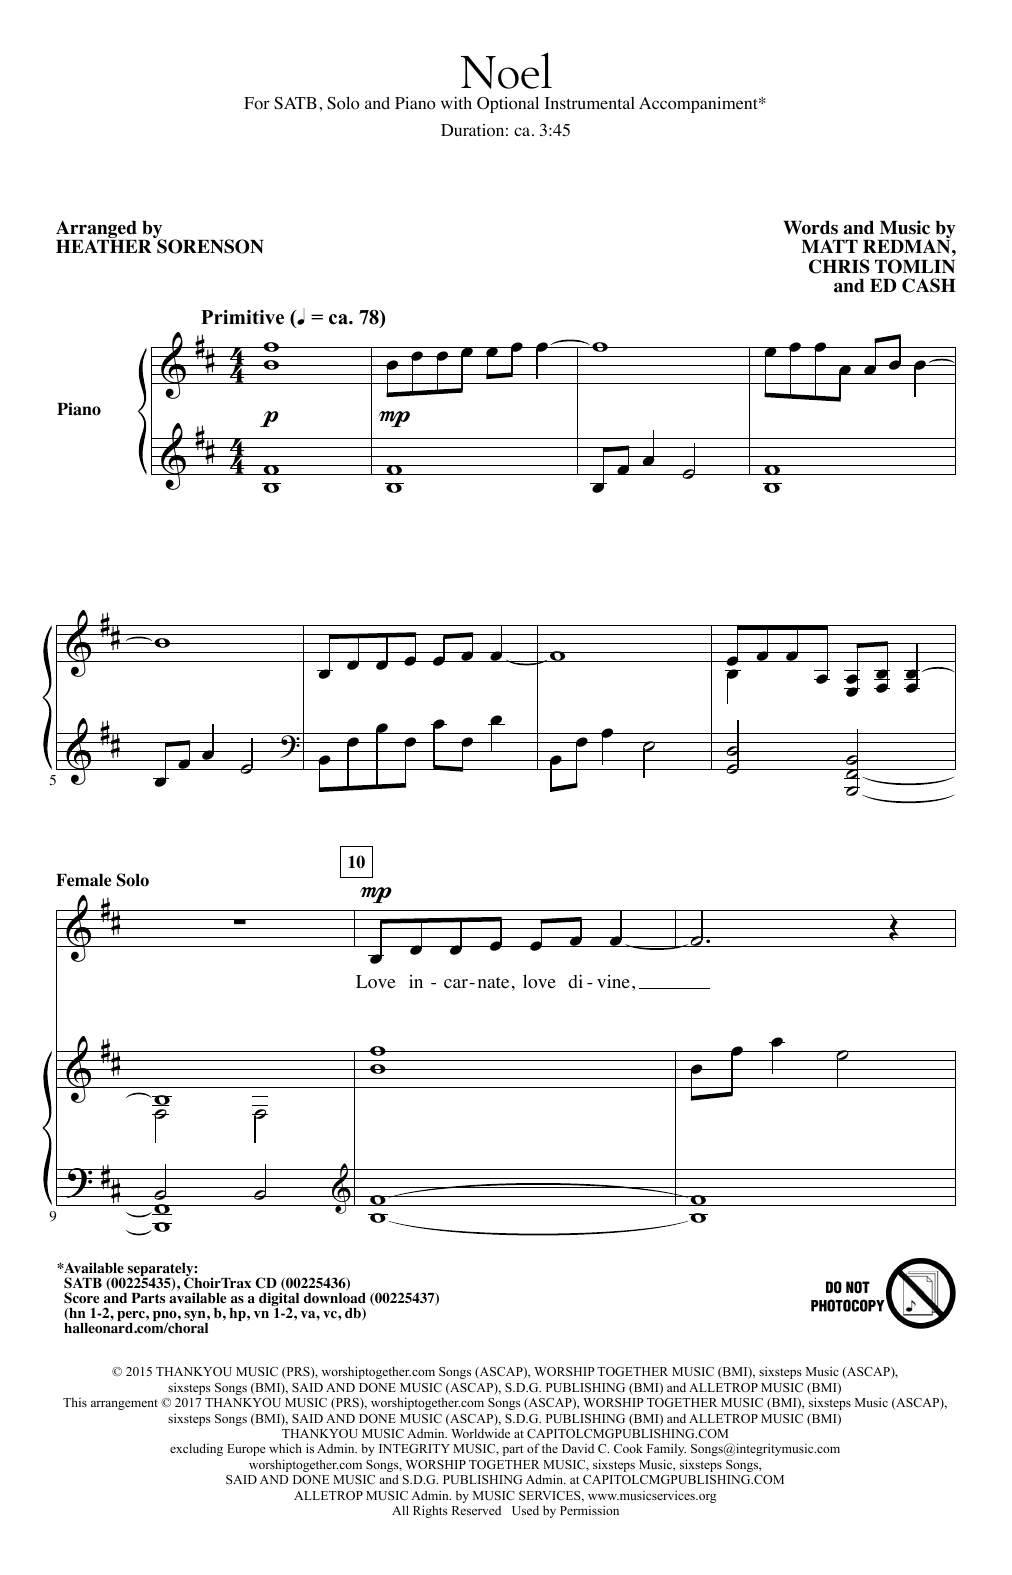 Chris Tomlin Noel (feat. Lauren Daigle) (arr. Heather Sorenson) Sheet Music Notes & Chords for SATB - Download or Print PDF